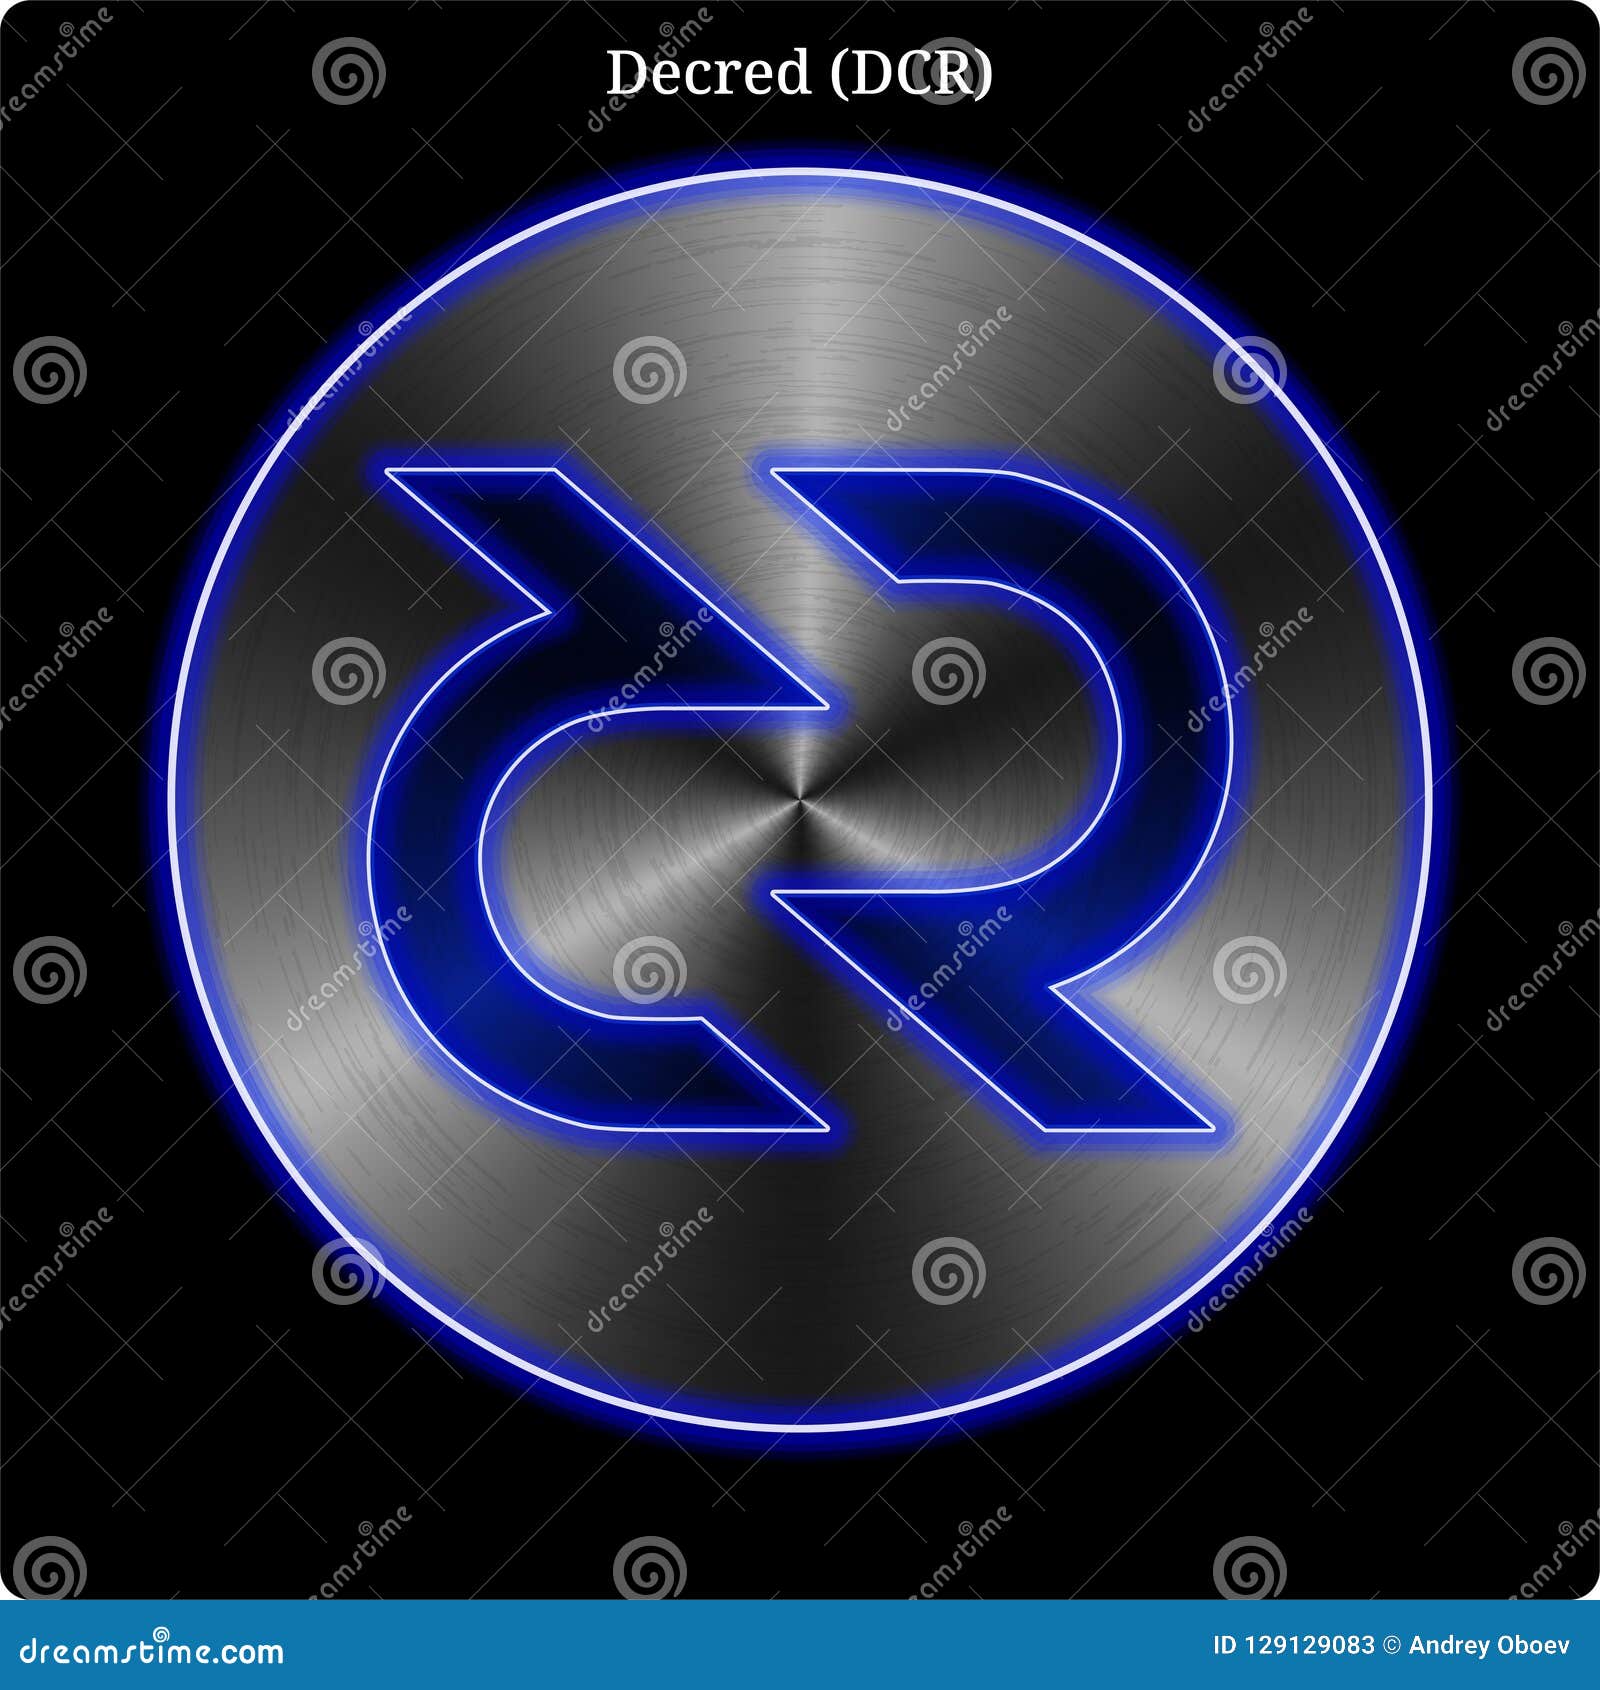 metal decred (dcr) coin witn blue neon glow.